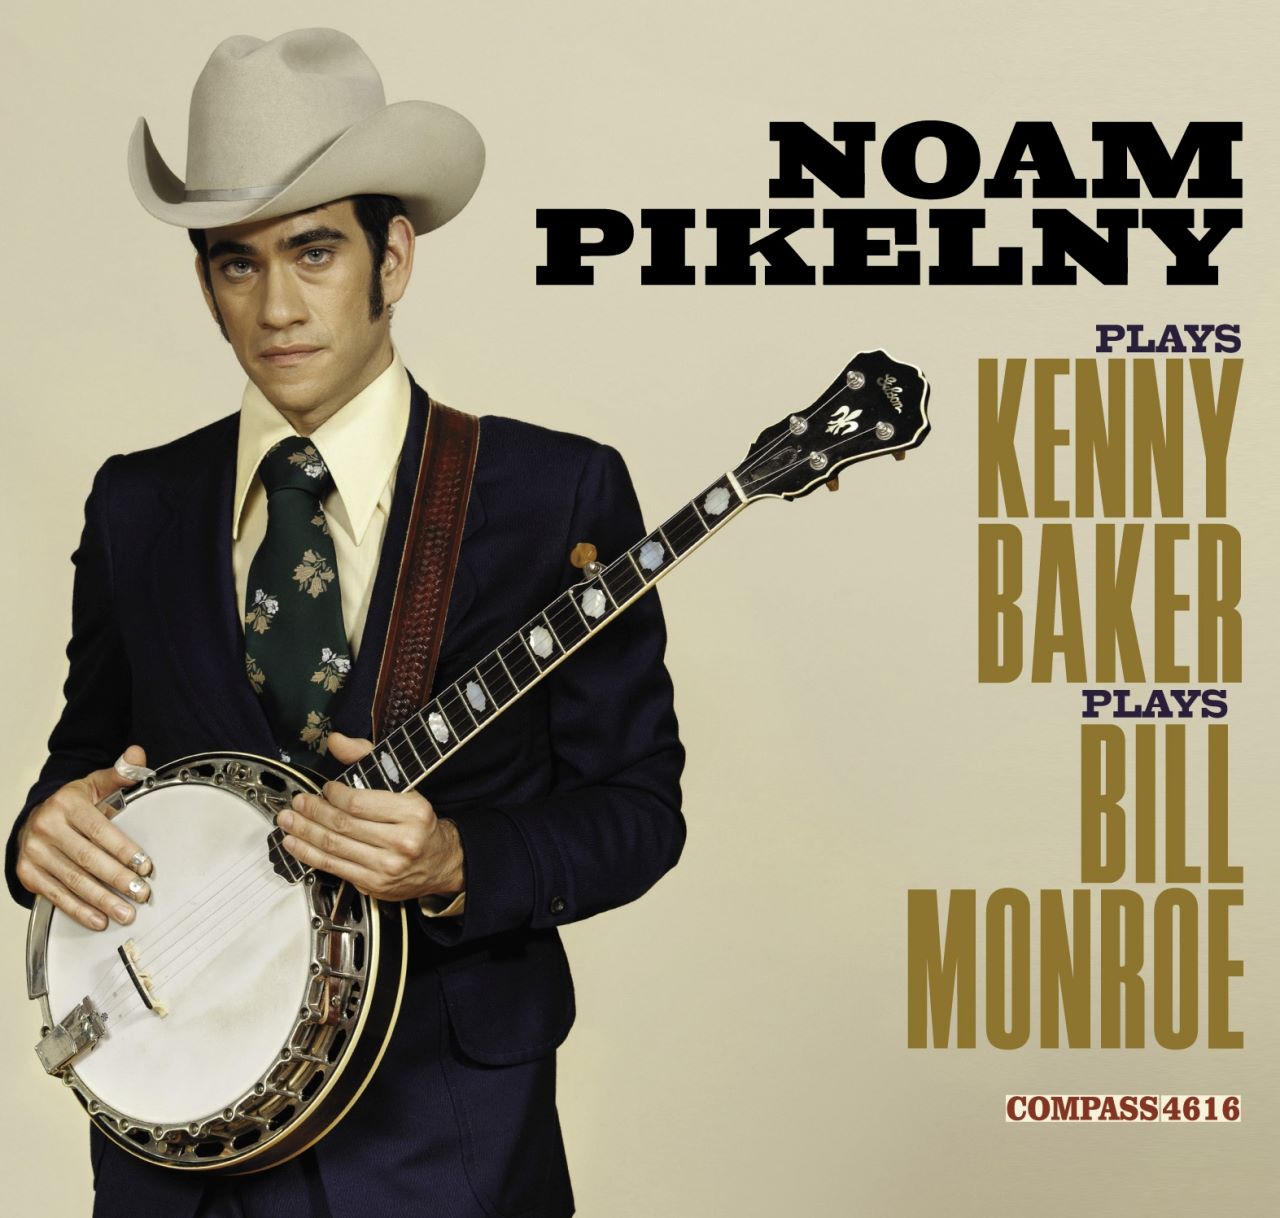 Noam Pikelny - Plays Kenny Baker Plays Bill Monroe cover album